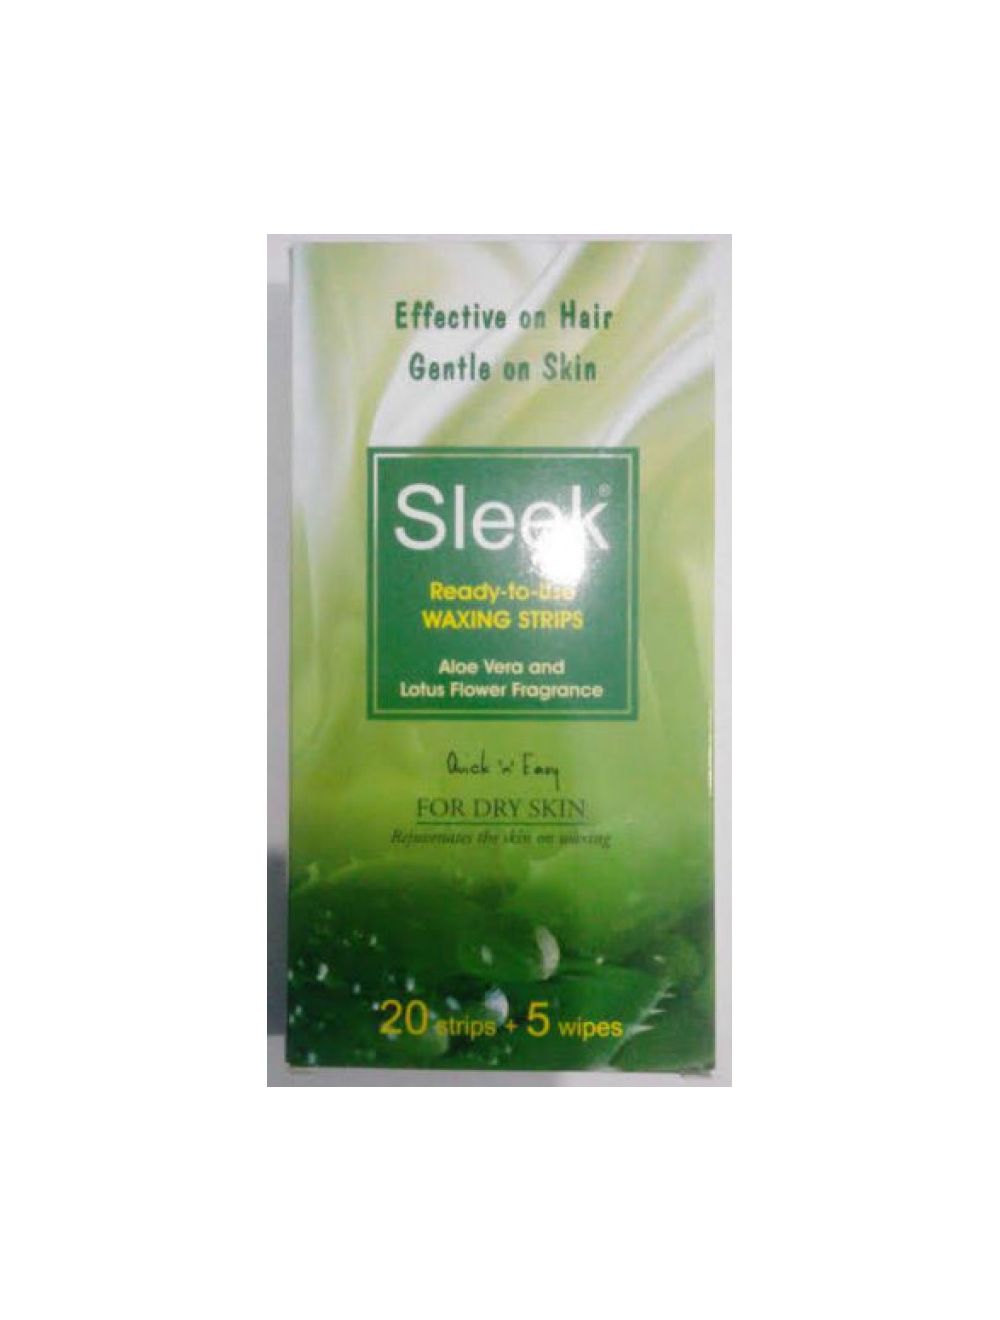 Sleek Ready to Use Waxing Strips for Dry Skin Aloe Vera & Lotus Flower Fragrance - 20 strips